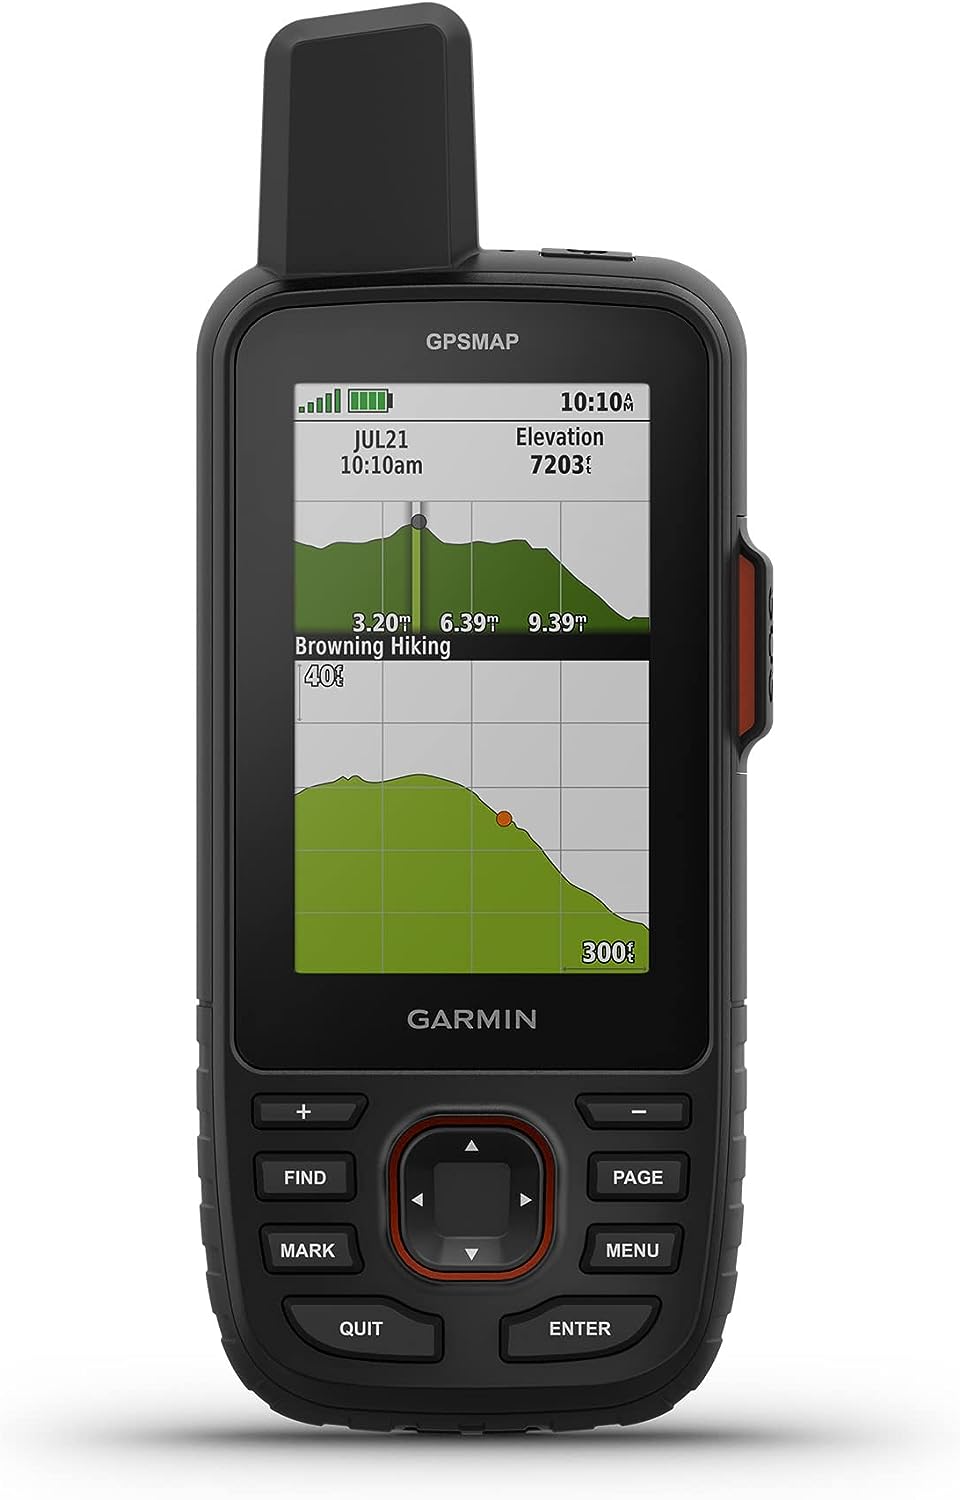 Garmin GPSMAP 67i Rugged GPS Handheld with inReach Satellite Technology